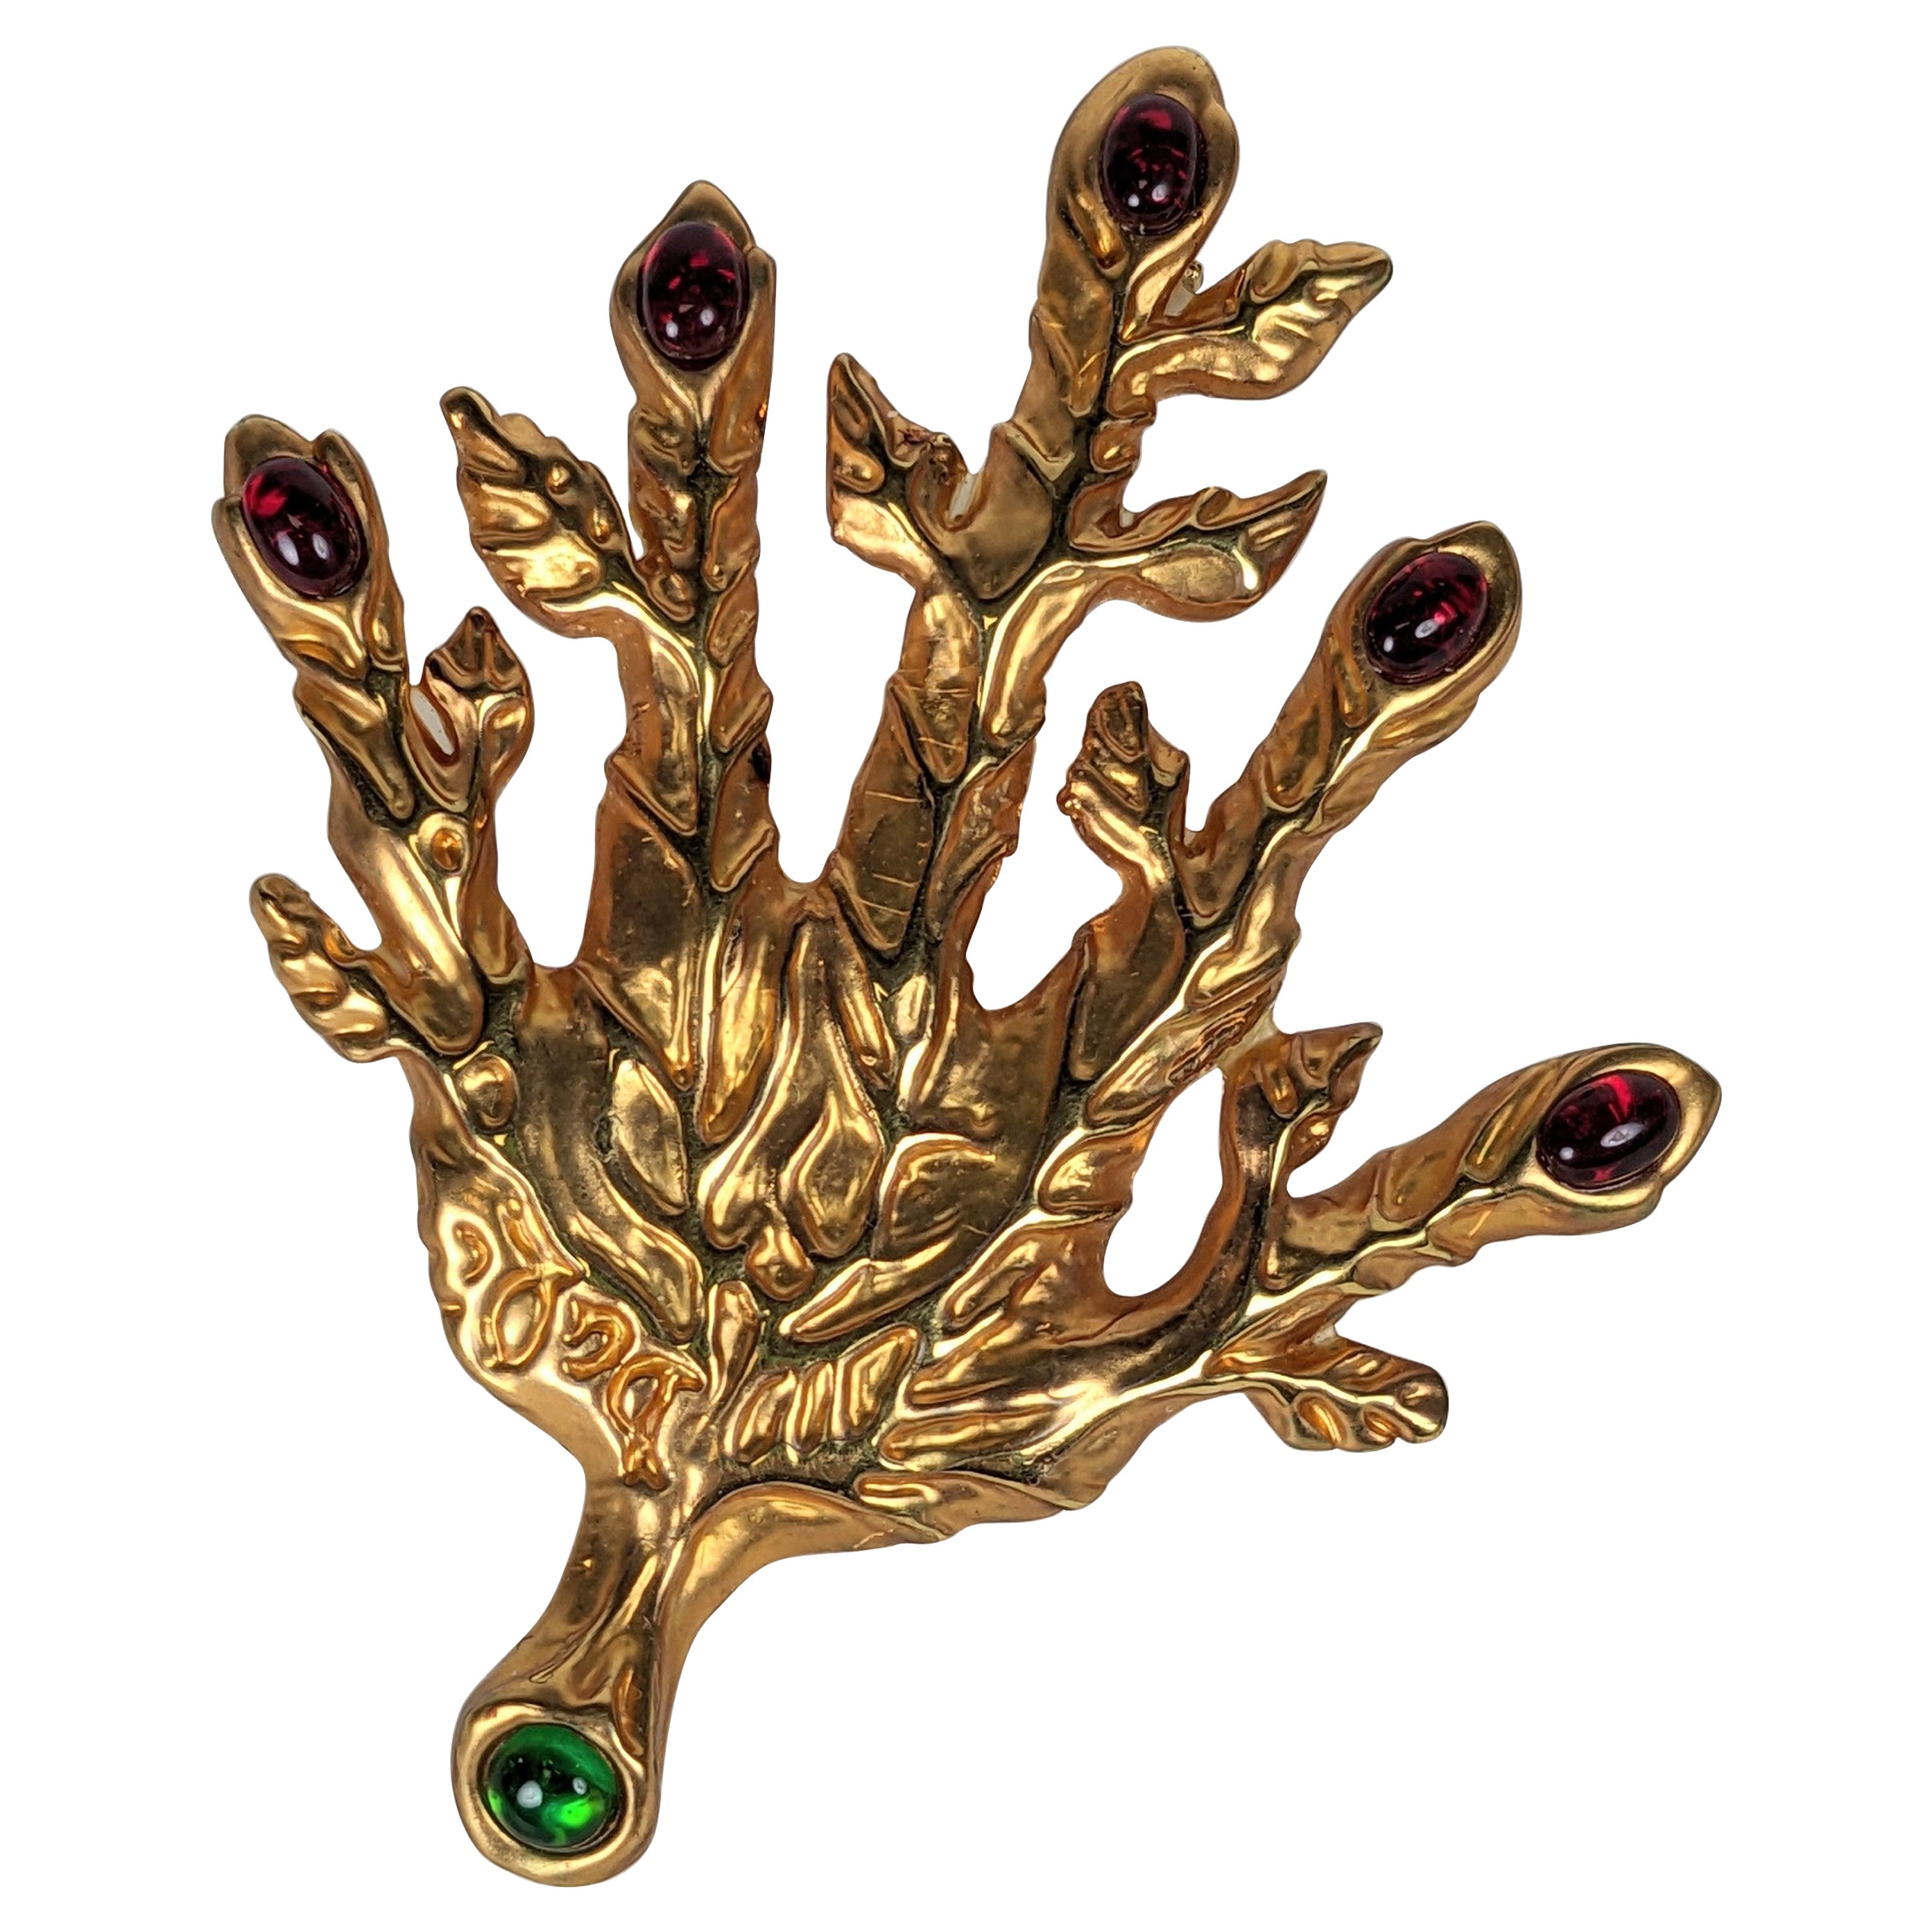 Did Salvador Dali create jewelry?